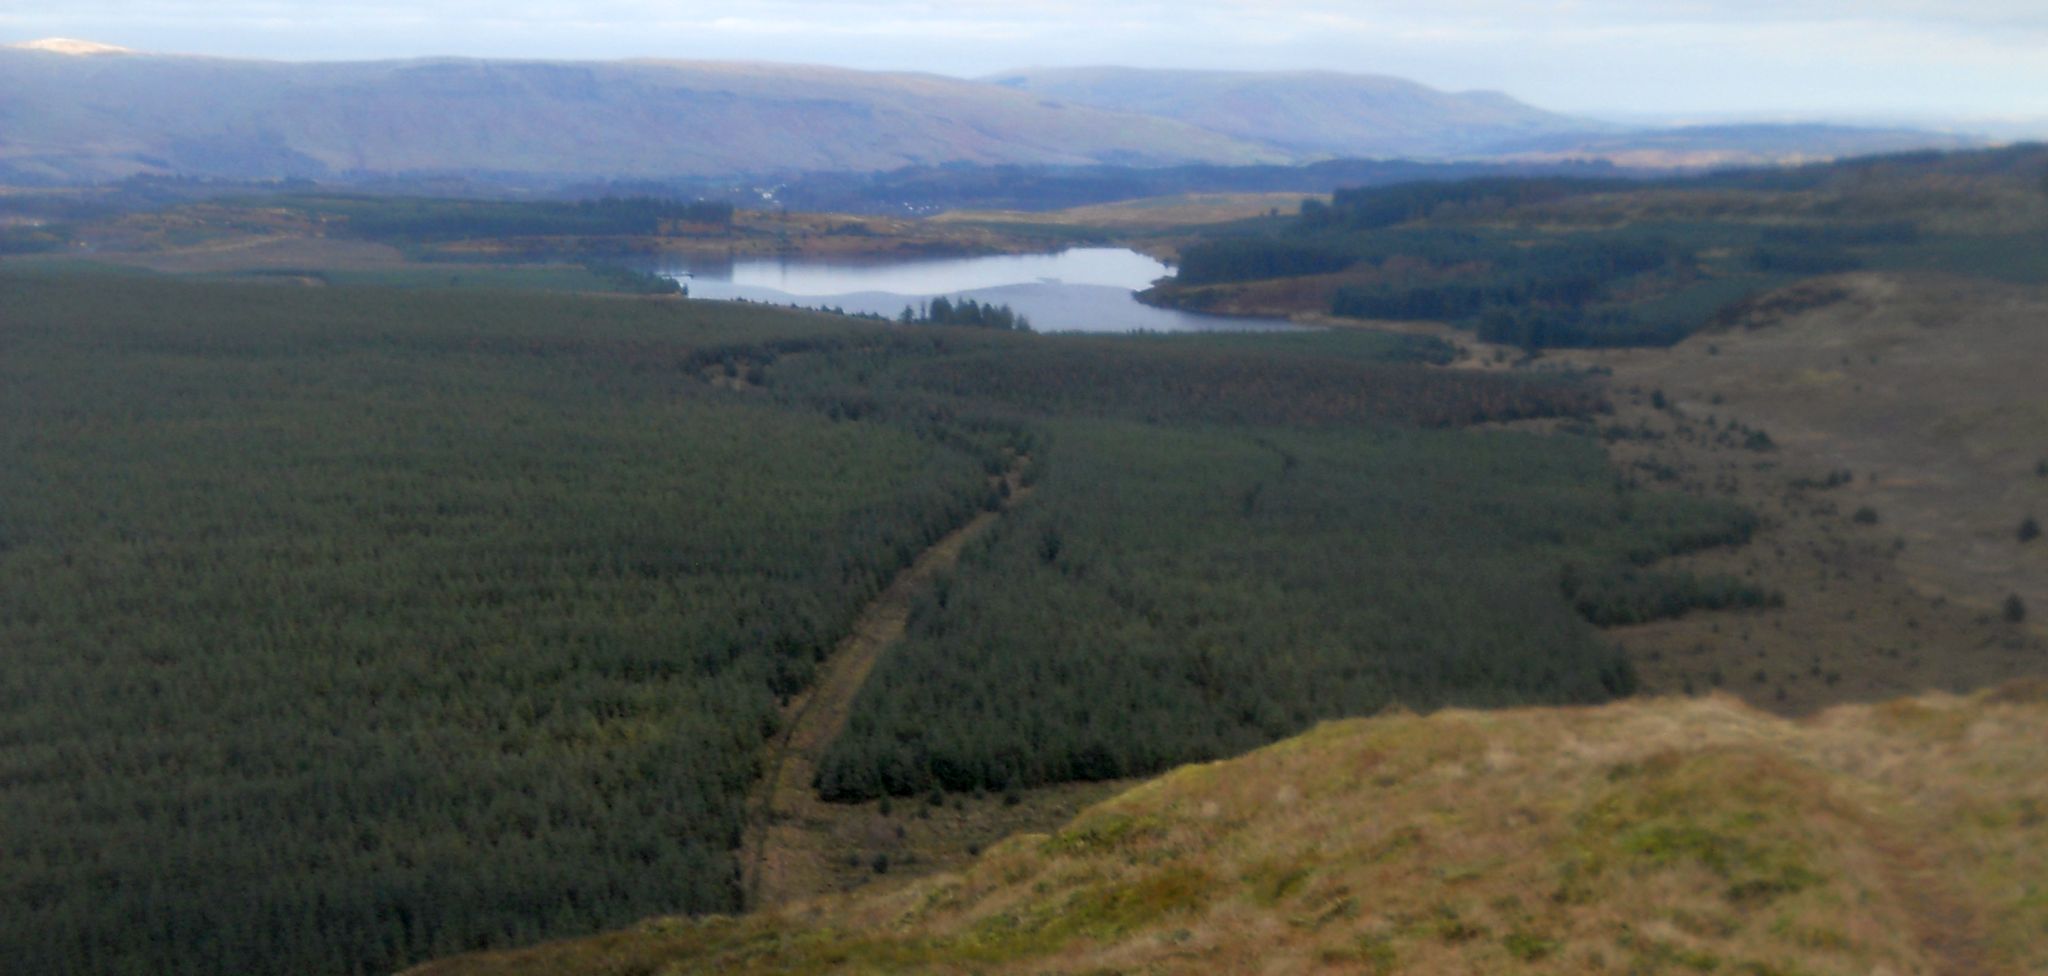 Return route through forest beside Kilmannan Reservoir